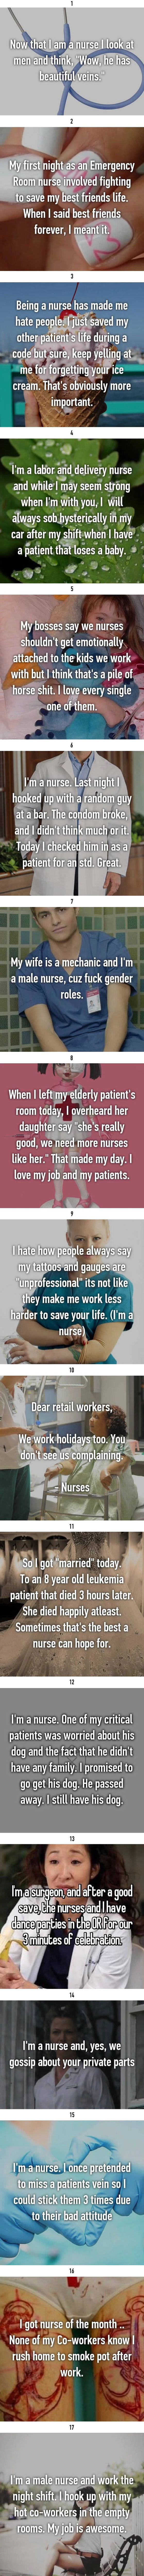 Nurses reveal their true feelings about their job